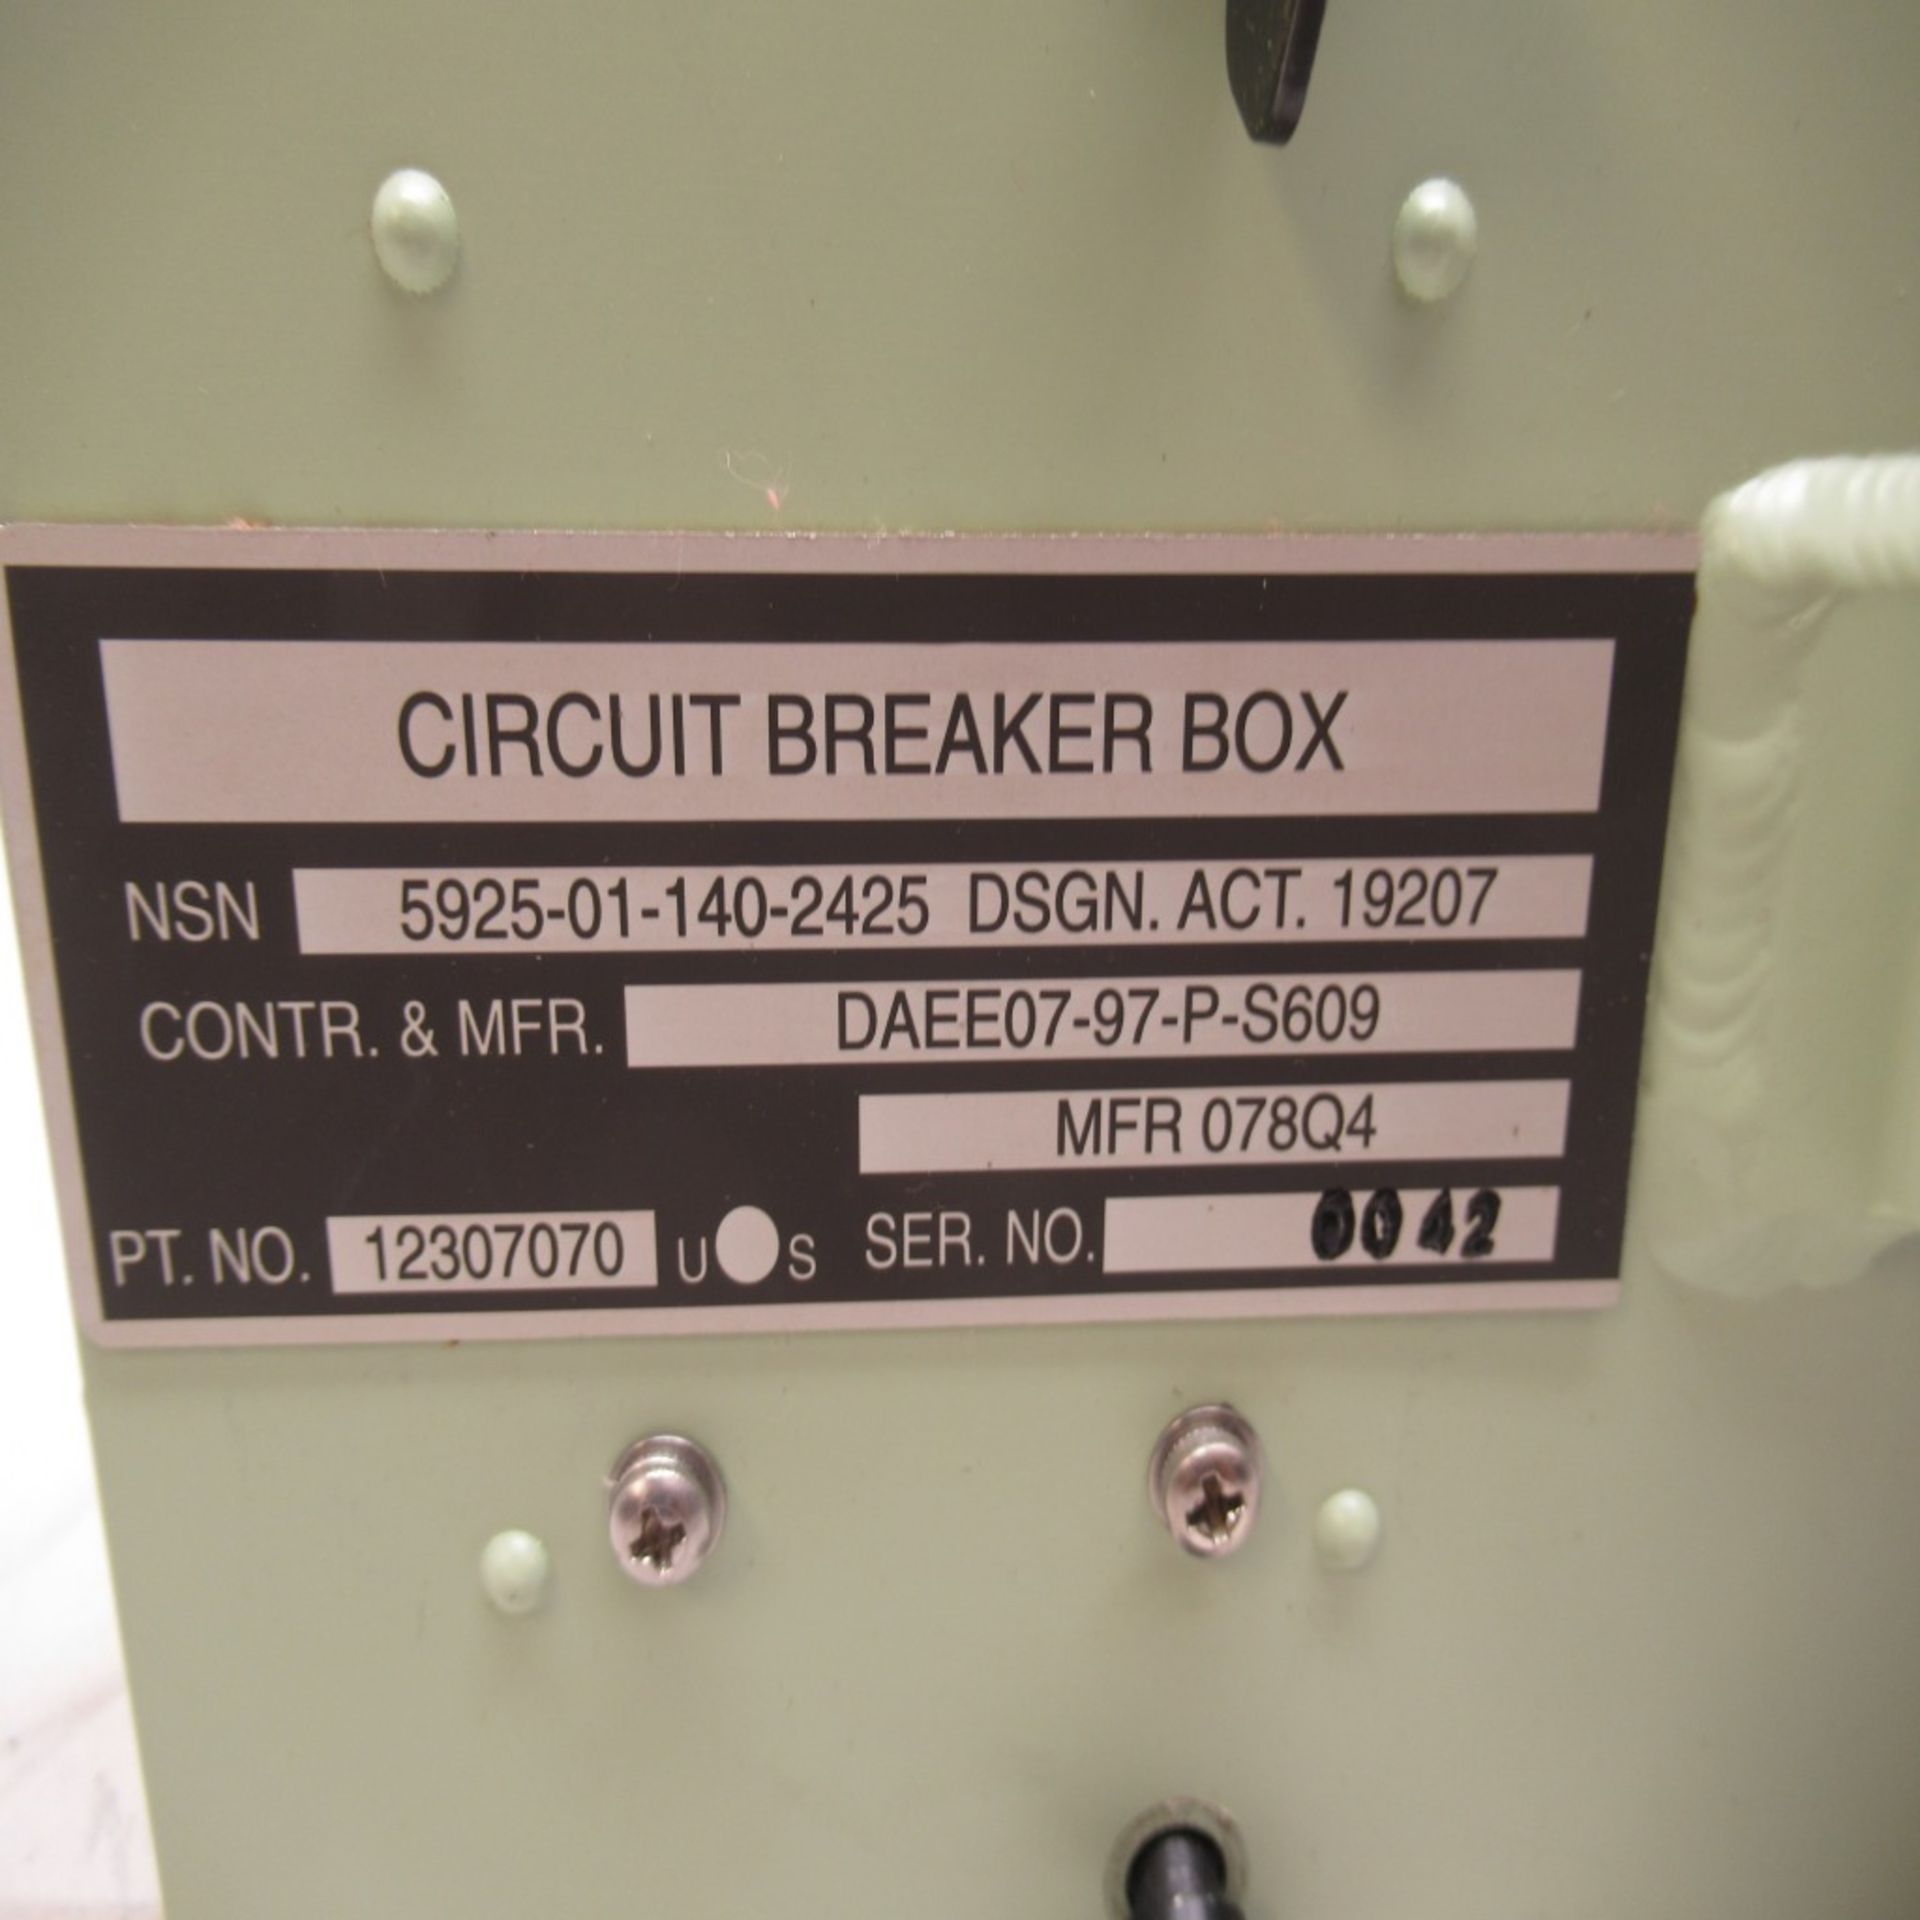 LOT OF 16- 11 CIRCUIT BREAKER BOXES PN 12307070, 1 MOTUM TELEPHONE, 1 XMTR PULSE GENERATOR, 1 - Image 2 of 26